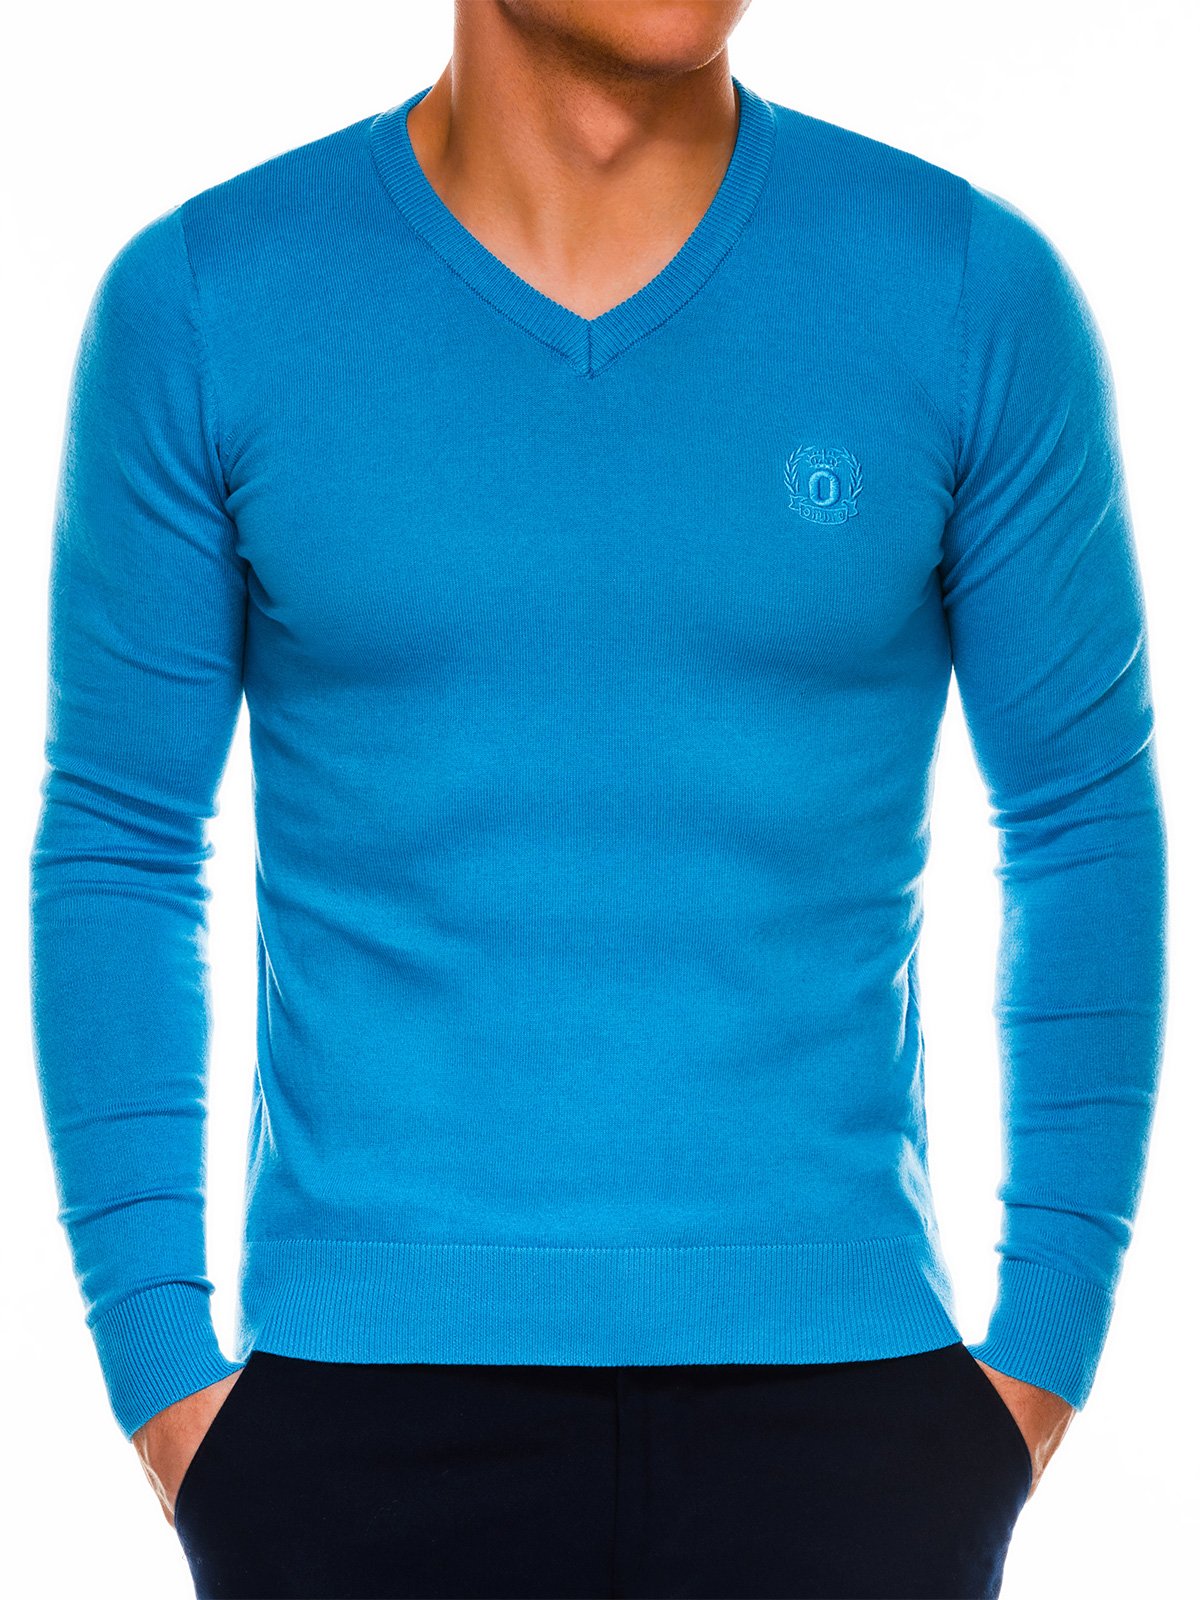 light blue sweater for boys